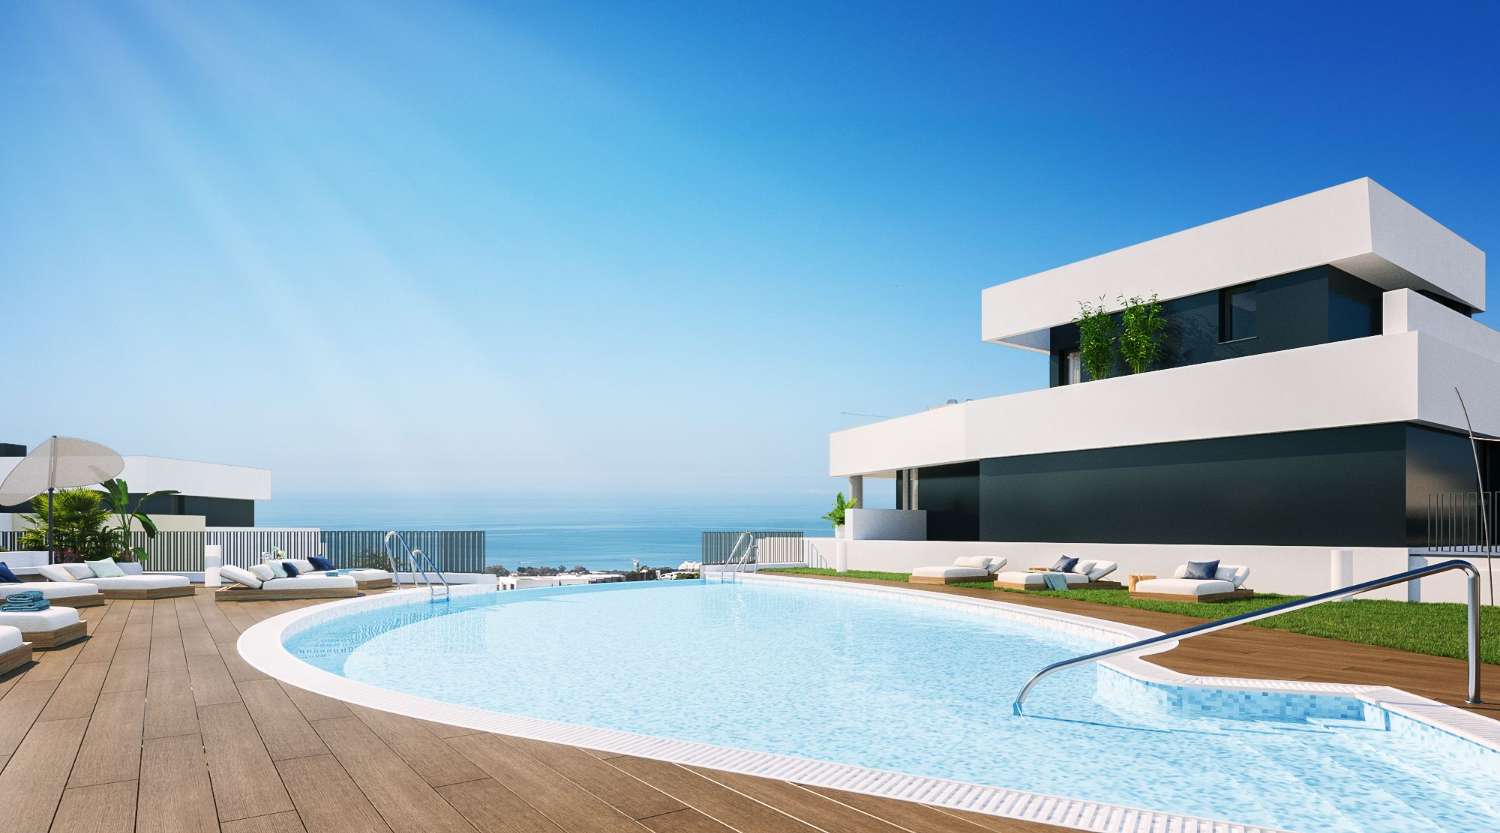 Geräumige und helle Apartments mit Meerblick in Marbella!